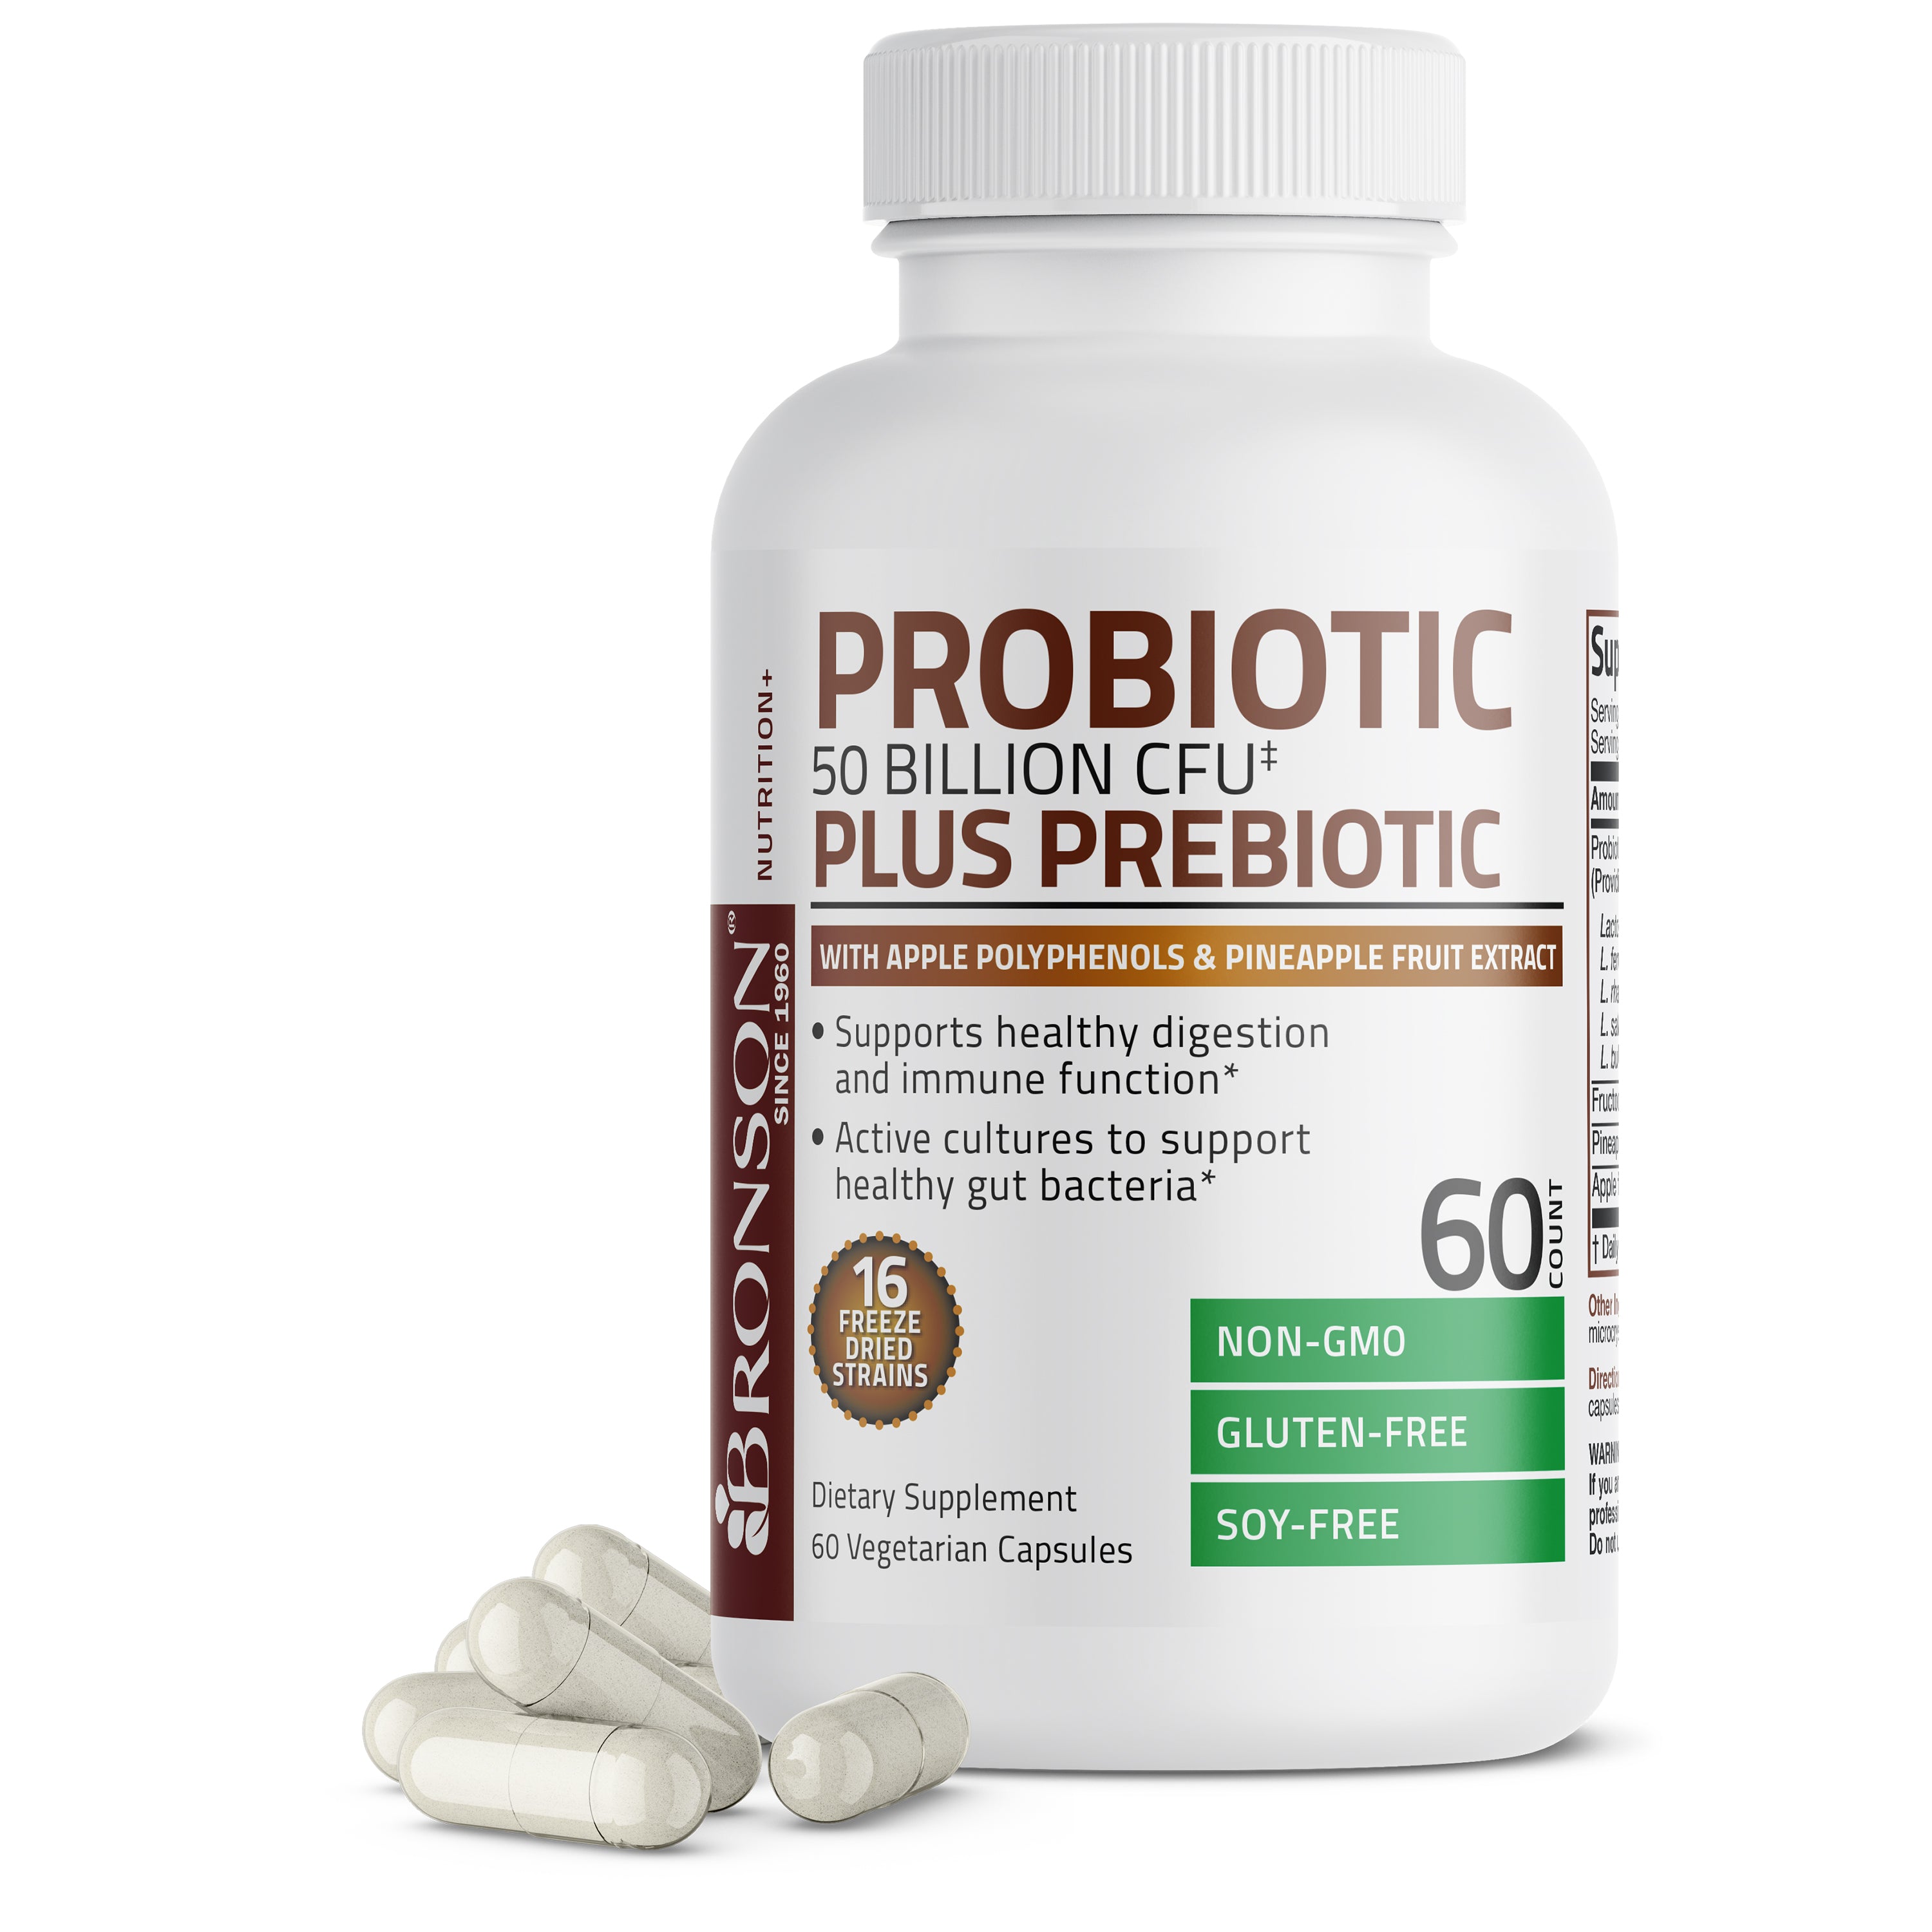 Probiotic Plus Prebiotic - 50 Billion CFU - 60 Vegetarian Capsules view 2 of 7